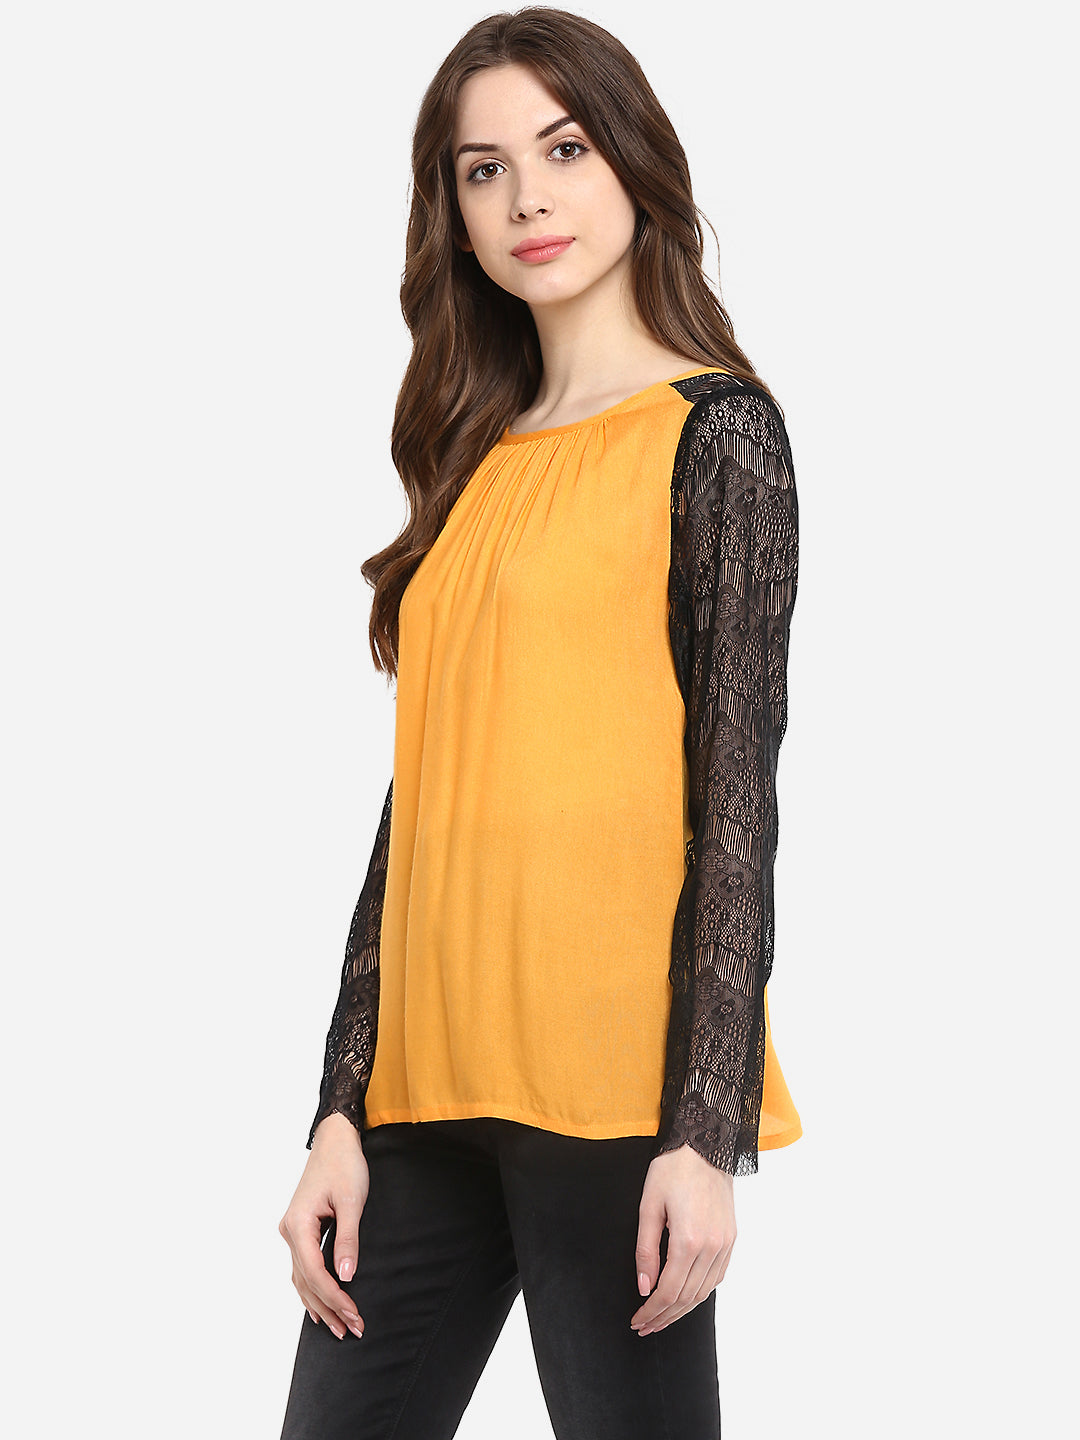 Women's Mustard Yellow Rayon Black Lace Sleeve Top